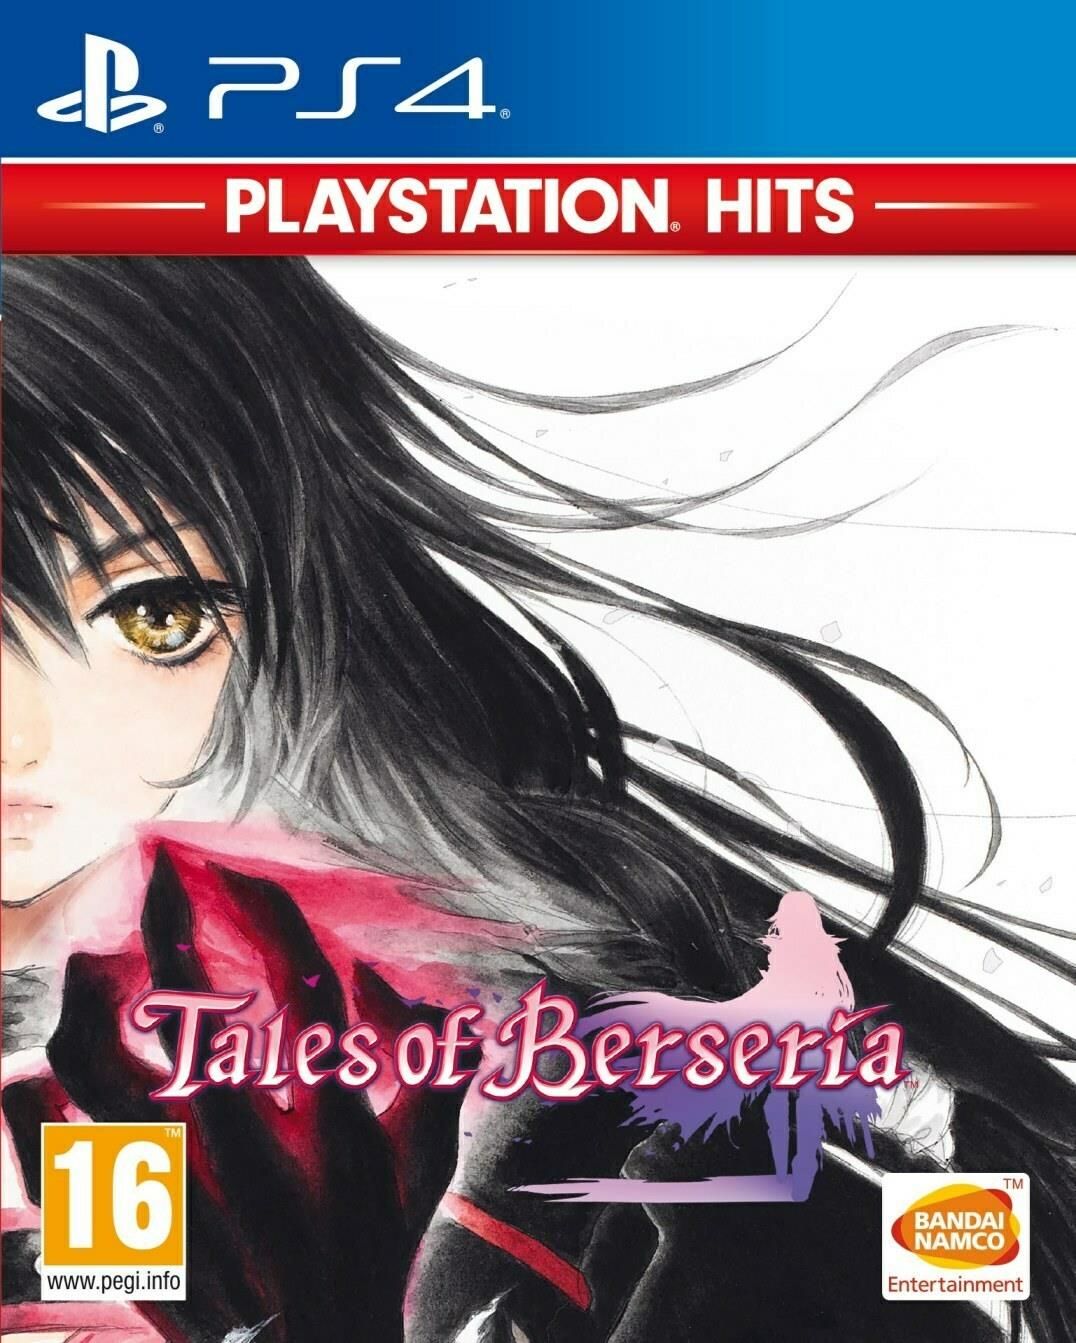 Tales of Berseria - Playstation Hits